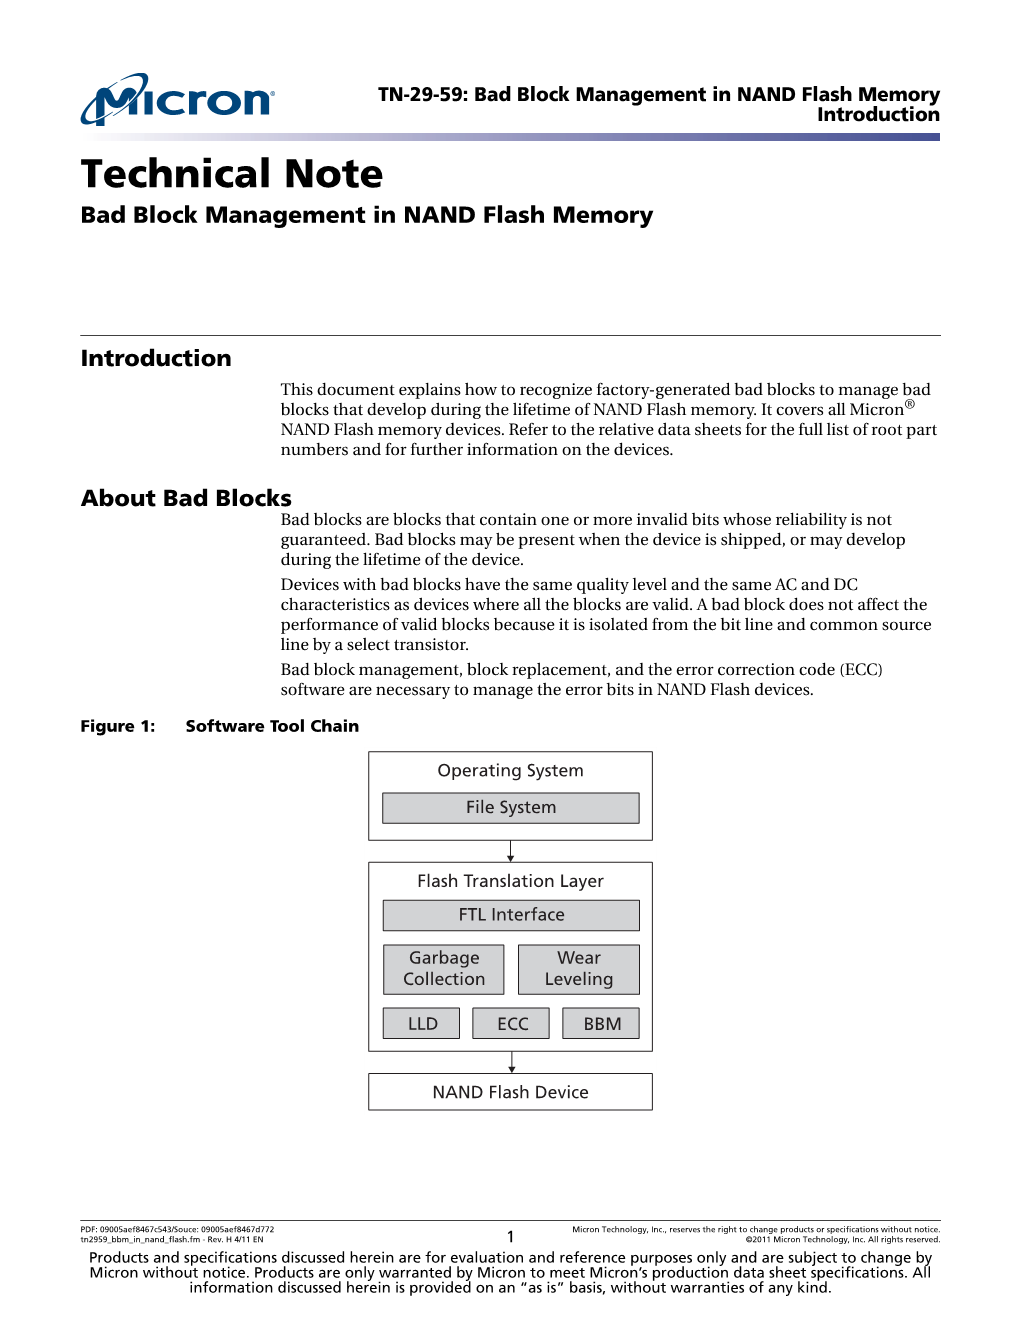 Bad Block Management in NAND Flash Memory Introduction Technical Note Bad Block Management in NAND Flash Memory